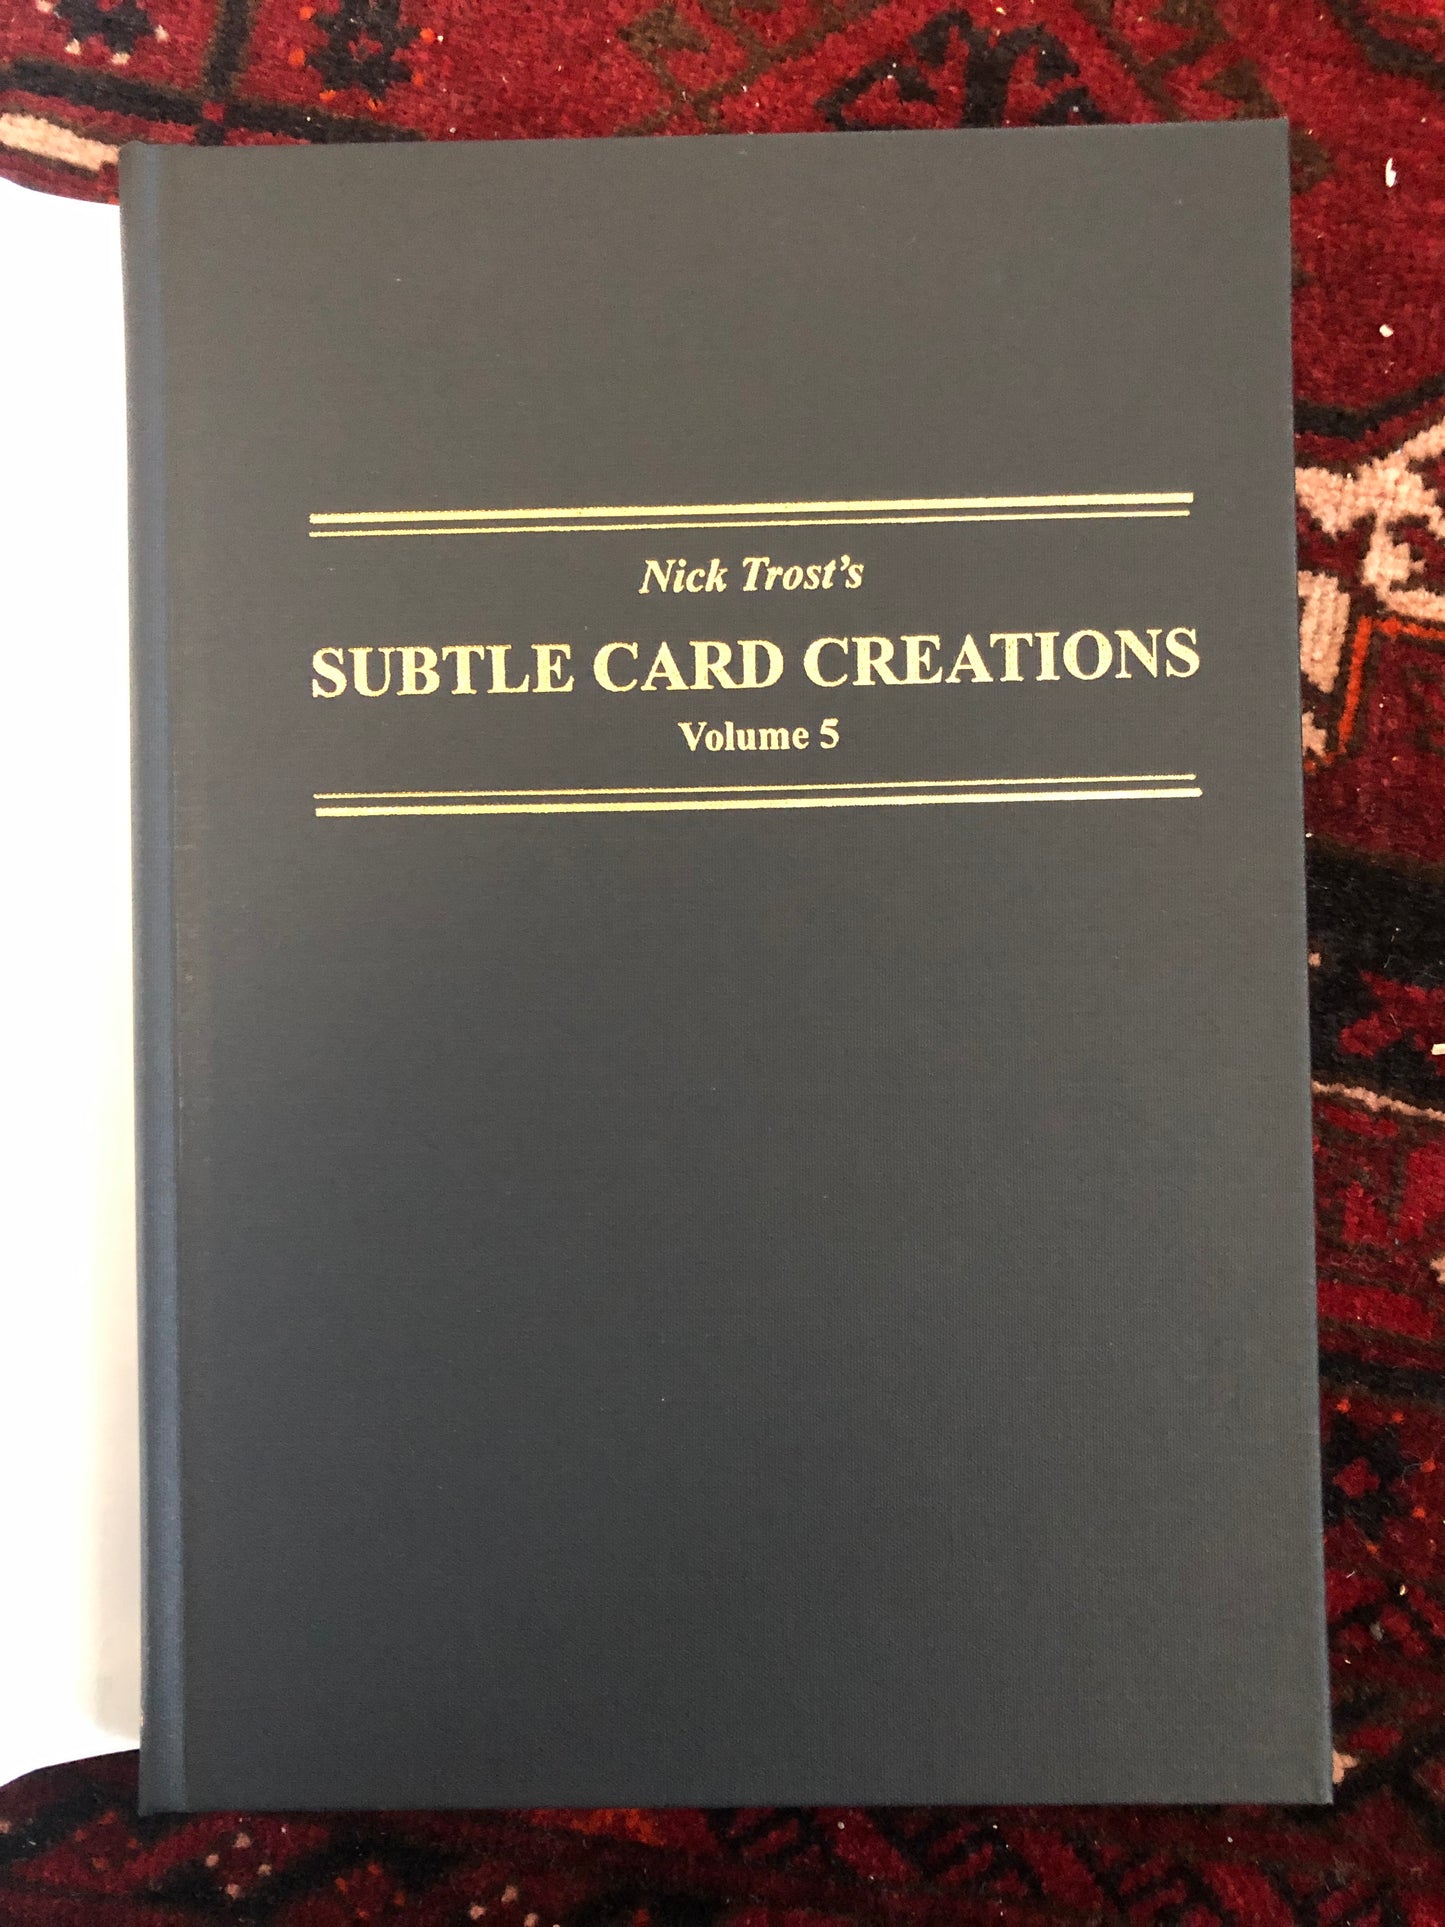 Subtle Card Creations Vol 5 - Nick Trost